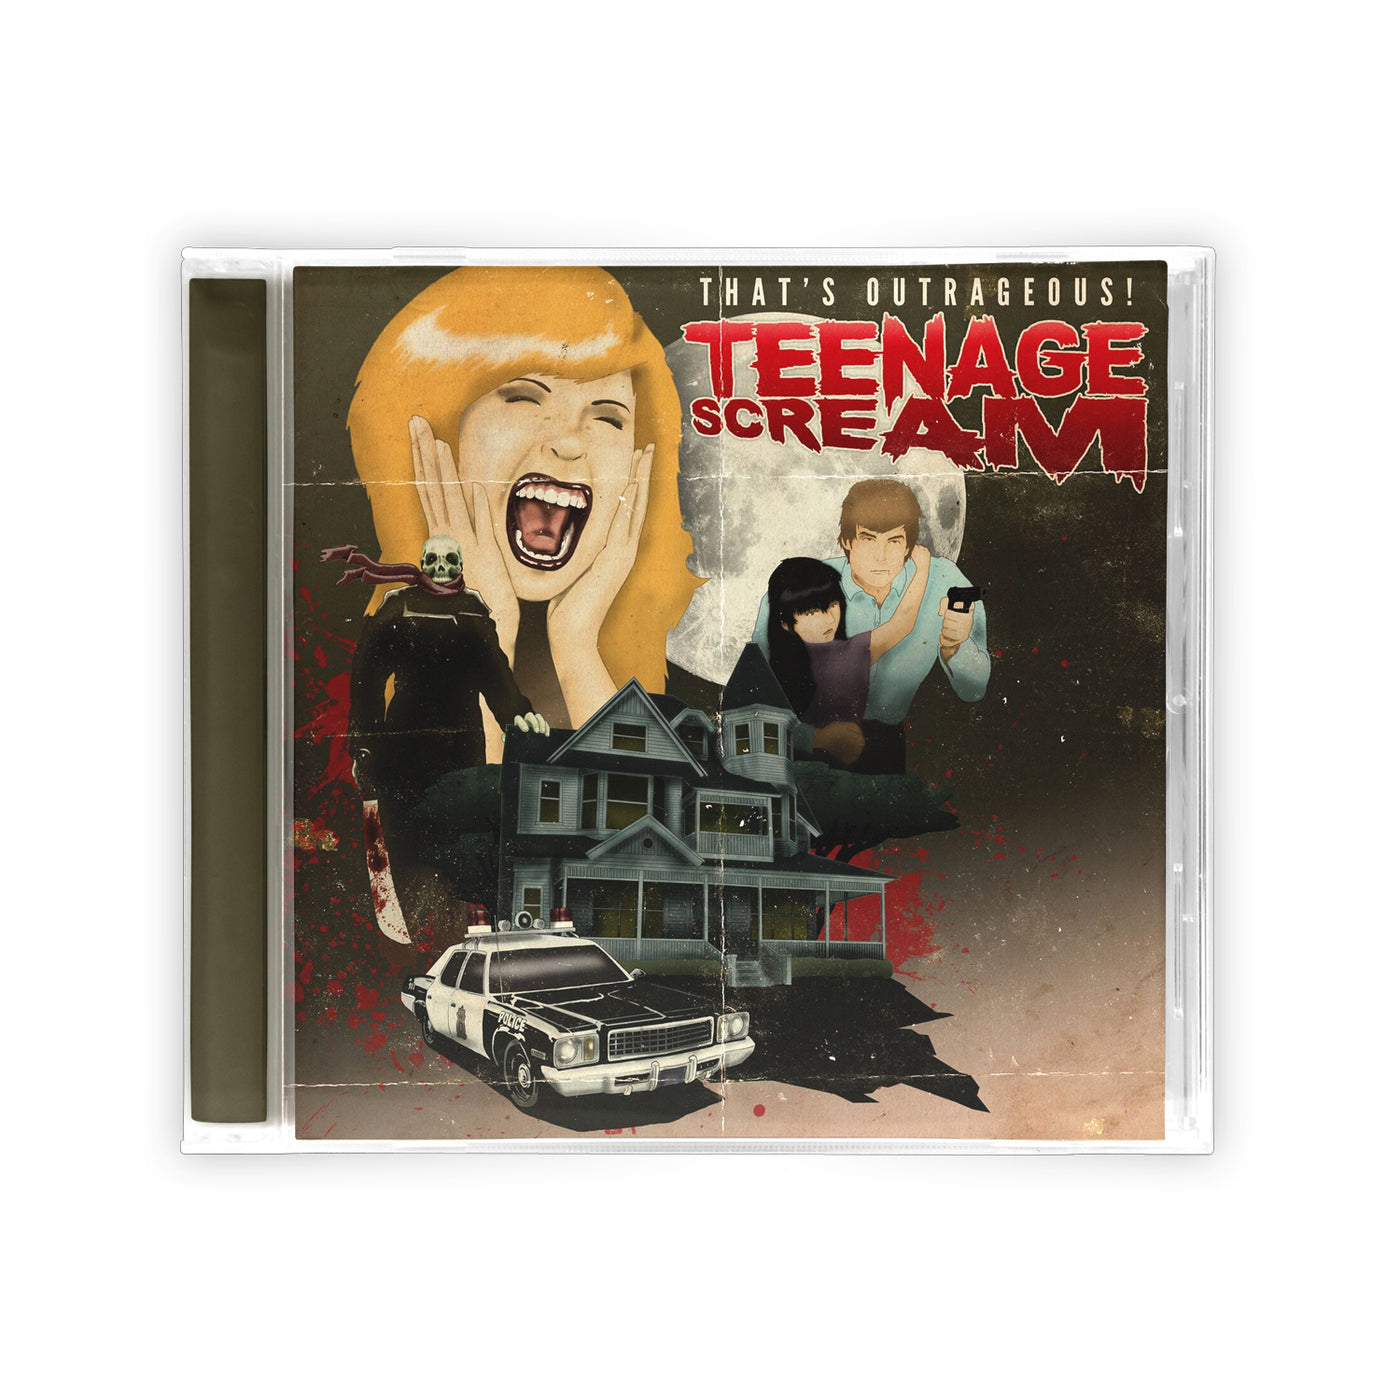 Teenage Scream CD